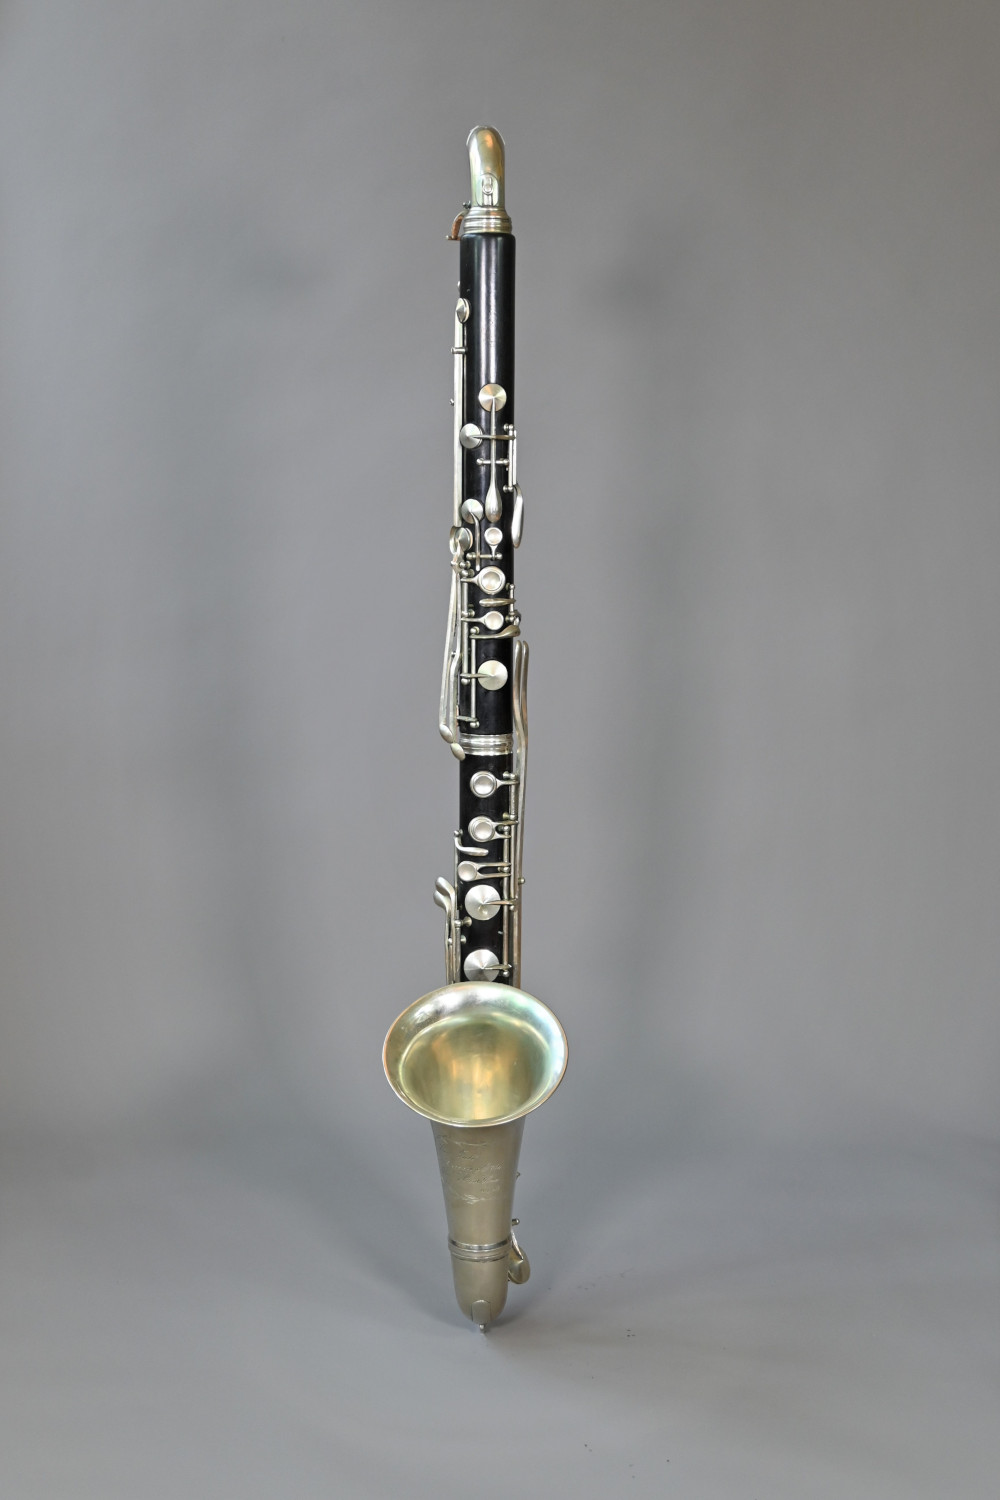 Bass-clarinet-vm-collectables1